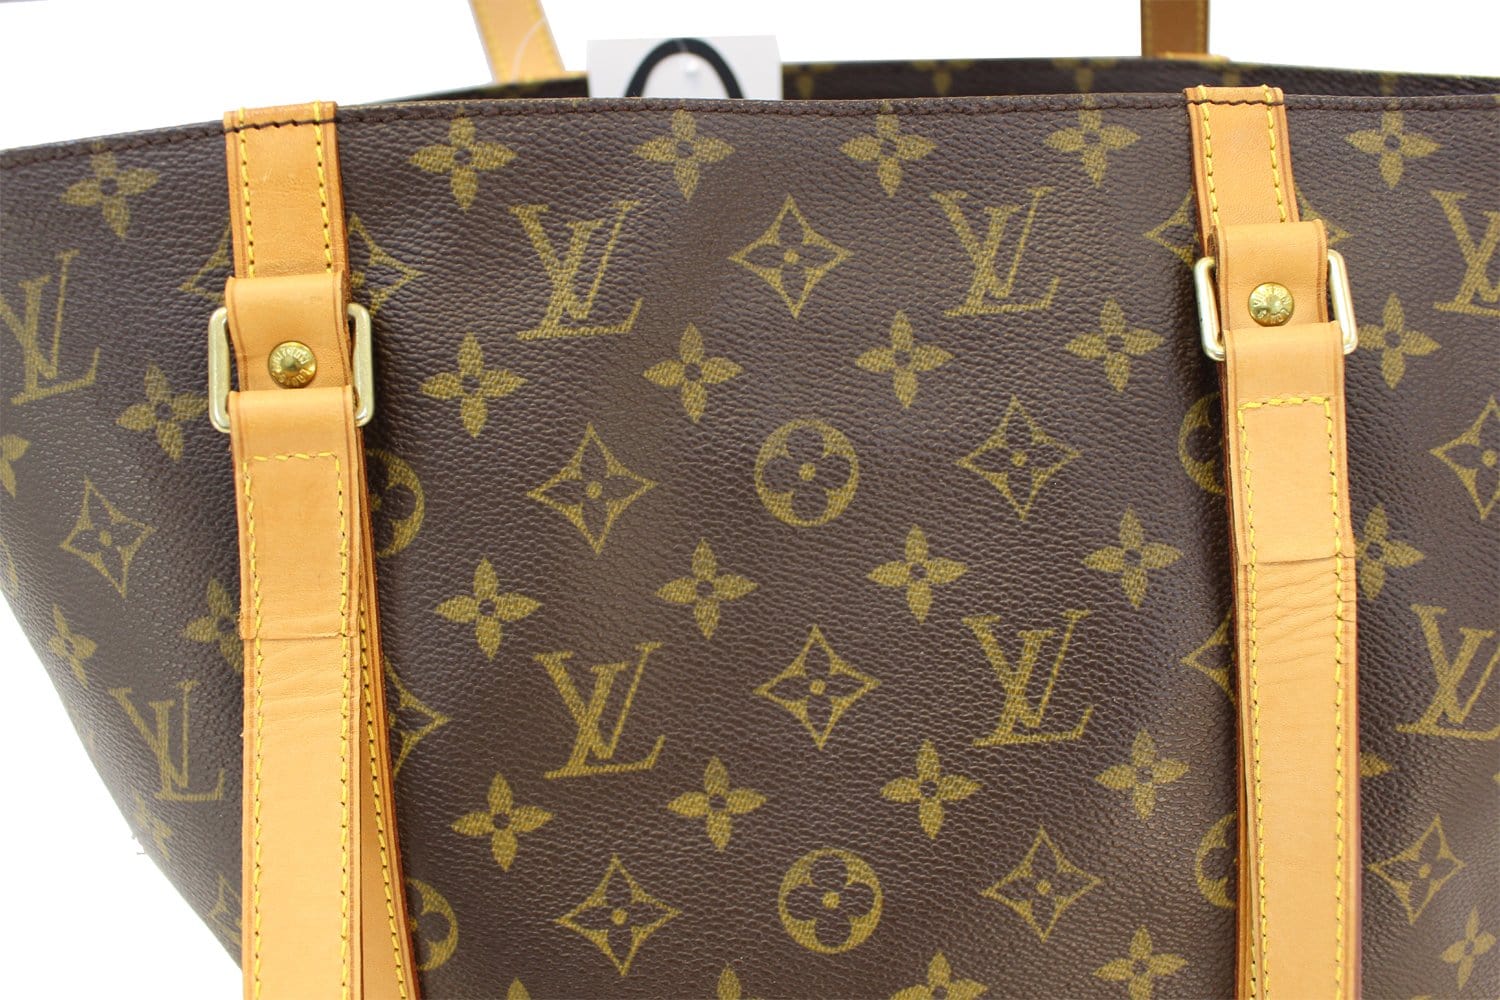 Authentic LOUIS VUITTON Sac Shopping Tote Monogram Shoulder Bag #45229